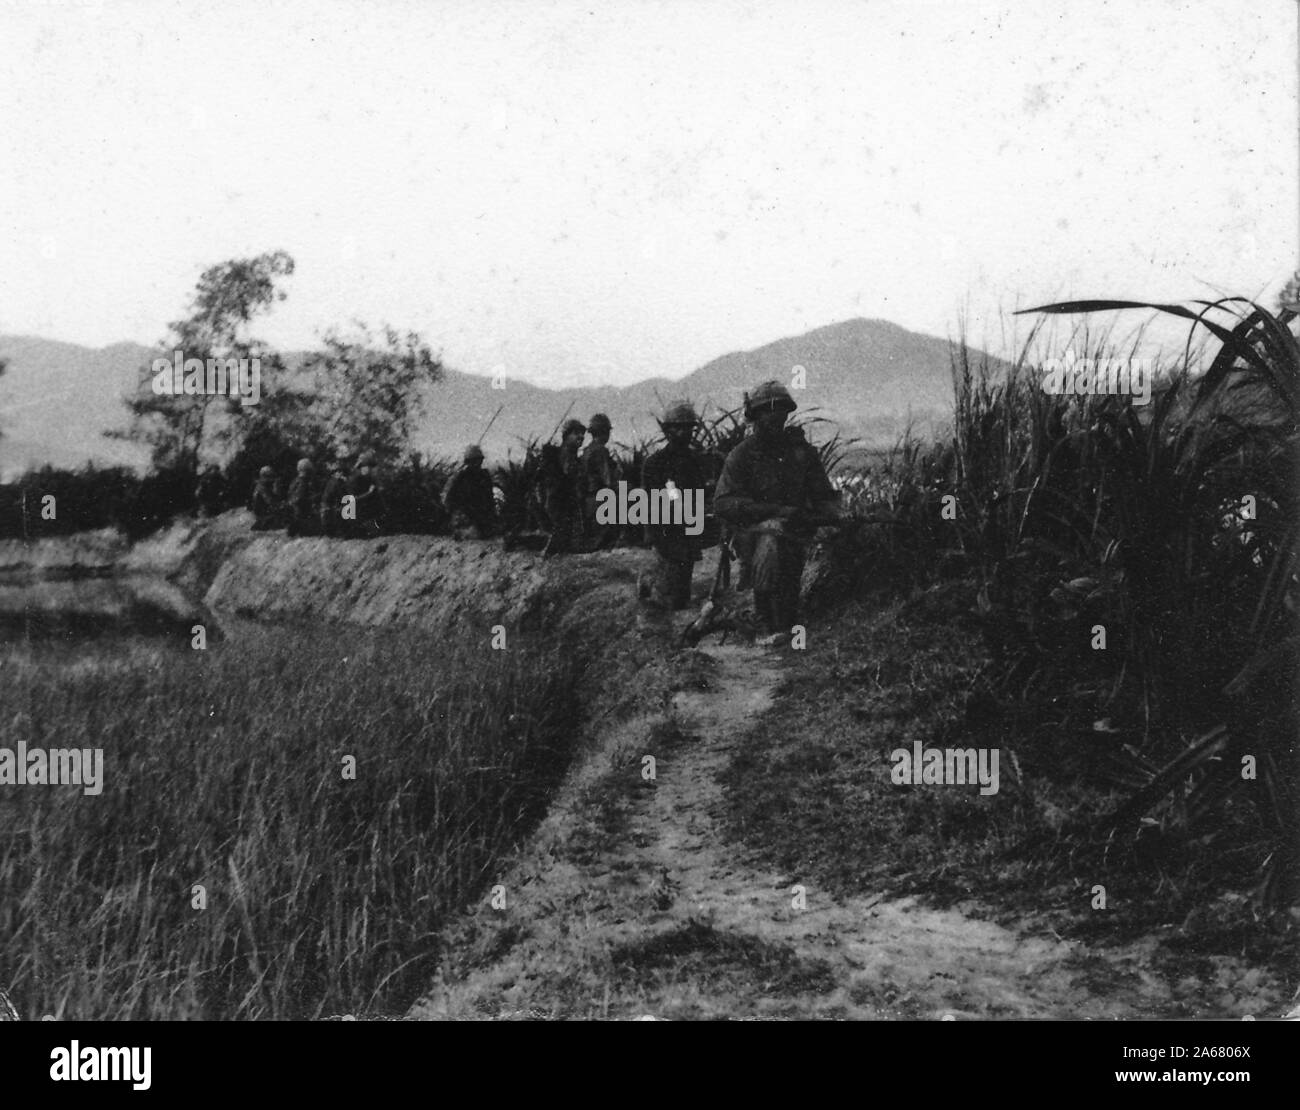 Dark shot of a line of armed American servicemen, walking in single file, on a dirt path weaving through rice paddies, Vietnam, 1965. () Stock Photo